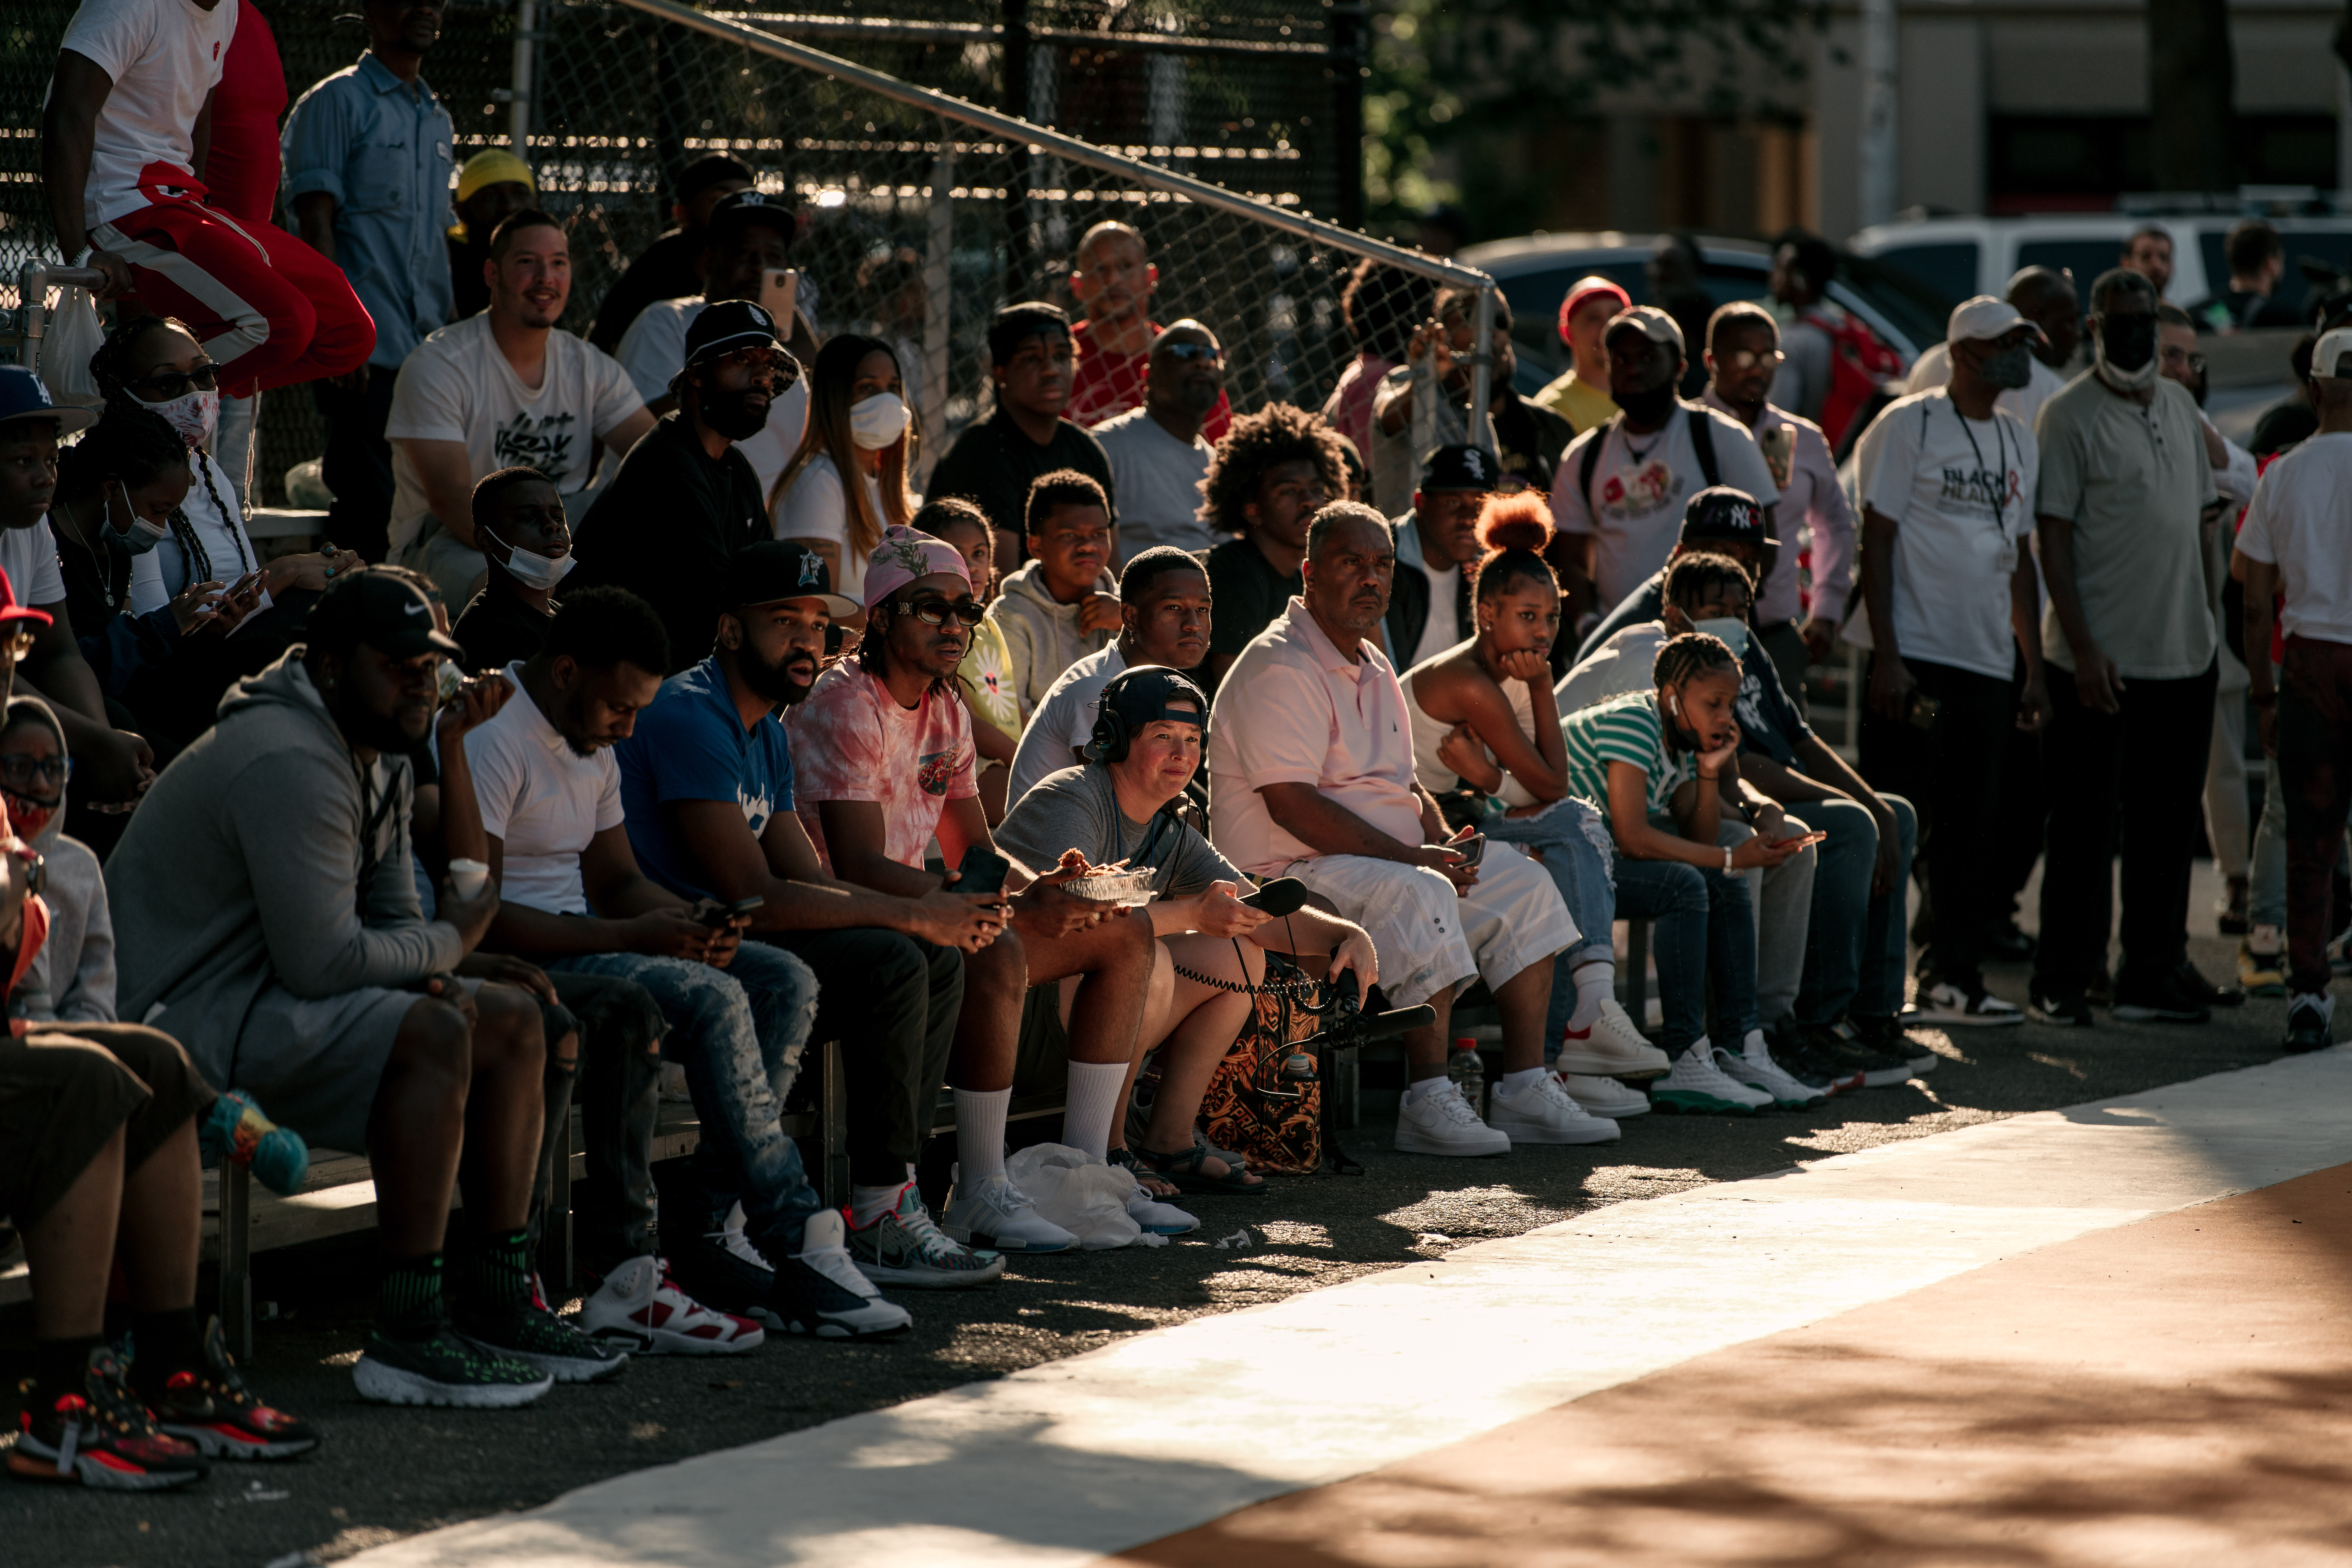 Summer Games Return To Rucker Park In Harlem, “The Mecca Of Street  Basketball” - Gothamist